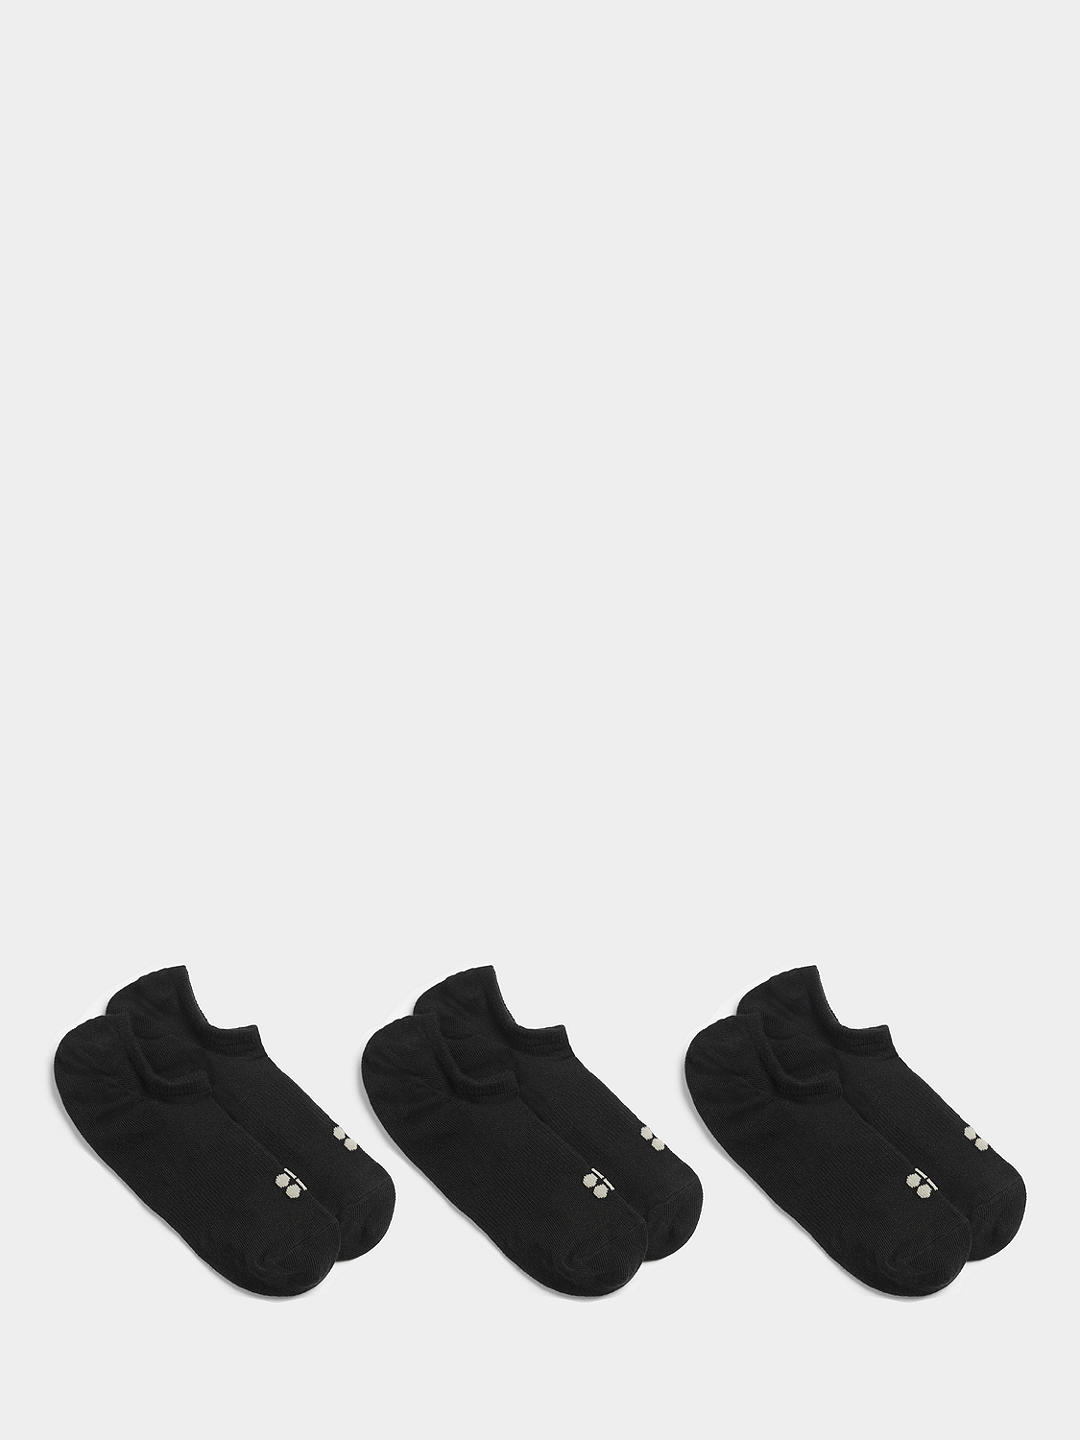 Sweaty Betty No Show Socks, Pack of 3, Black at John Lewis & Partners